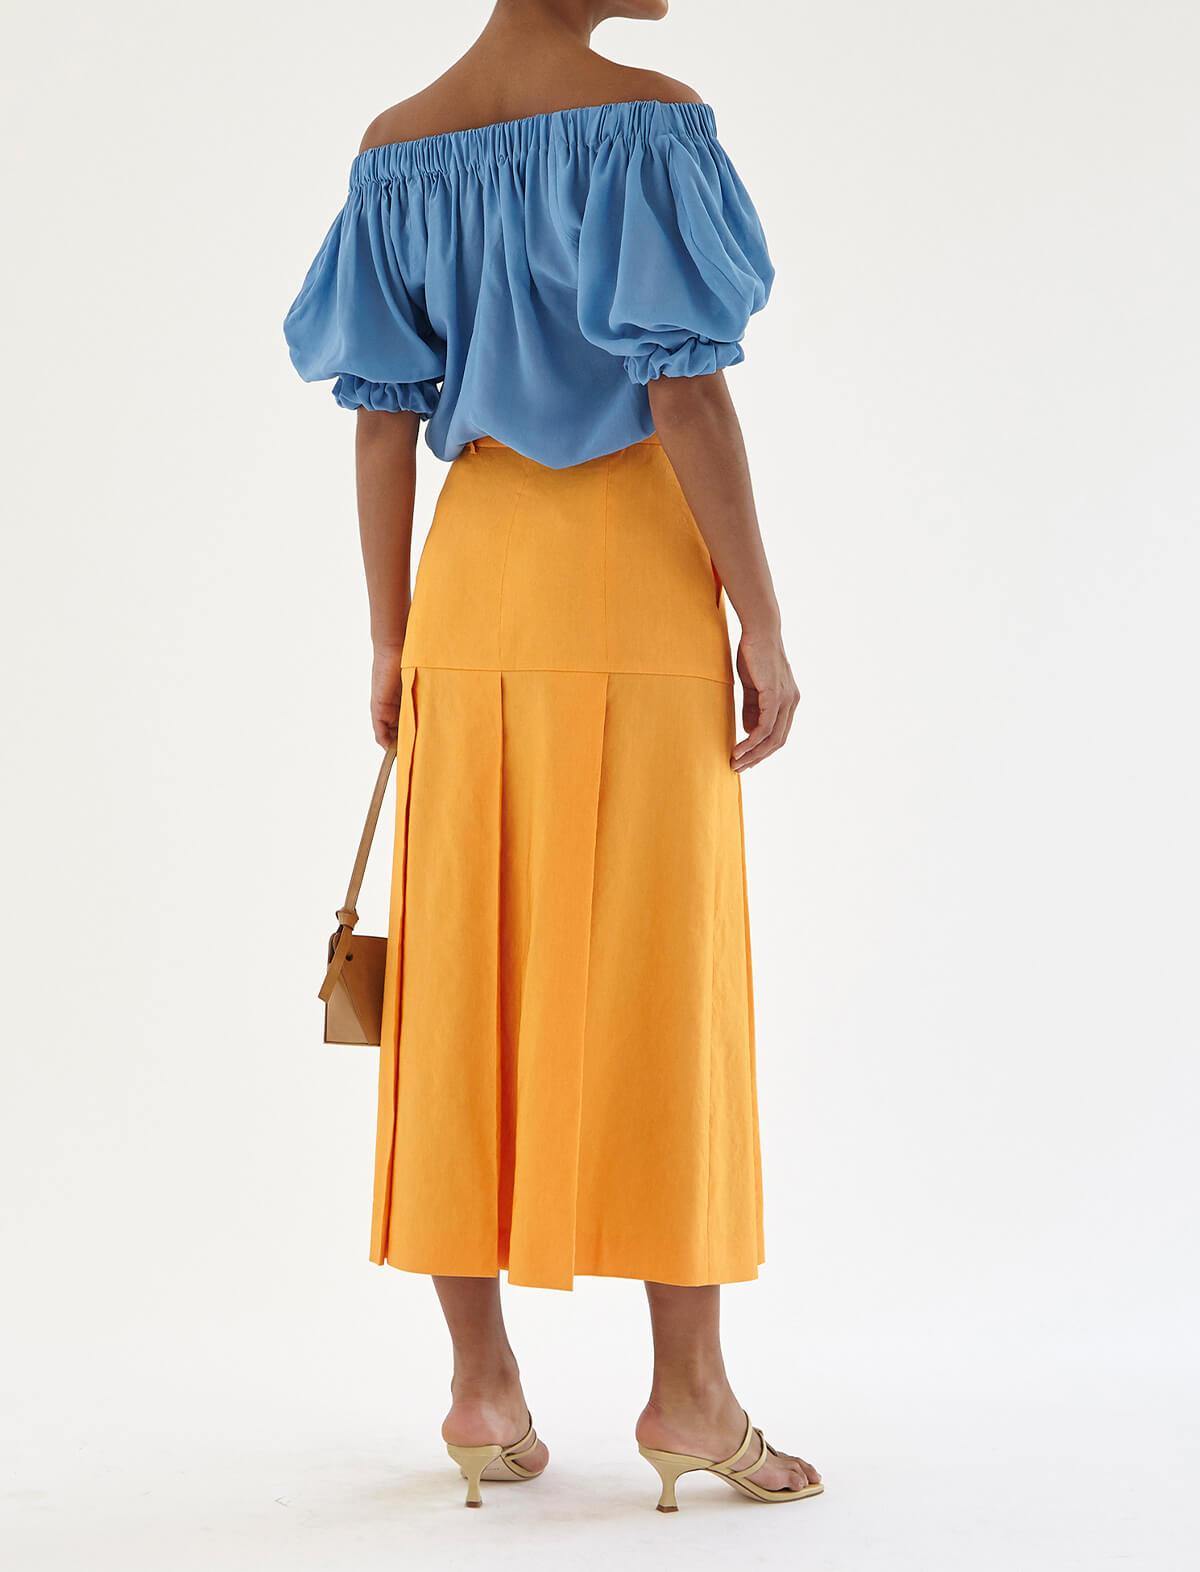 REJINA PYO Miller Viscose Blend Skirt In Orange | CLOSET Singapore